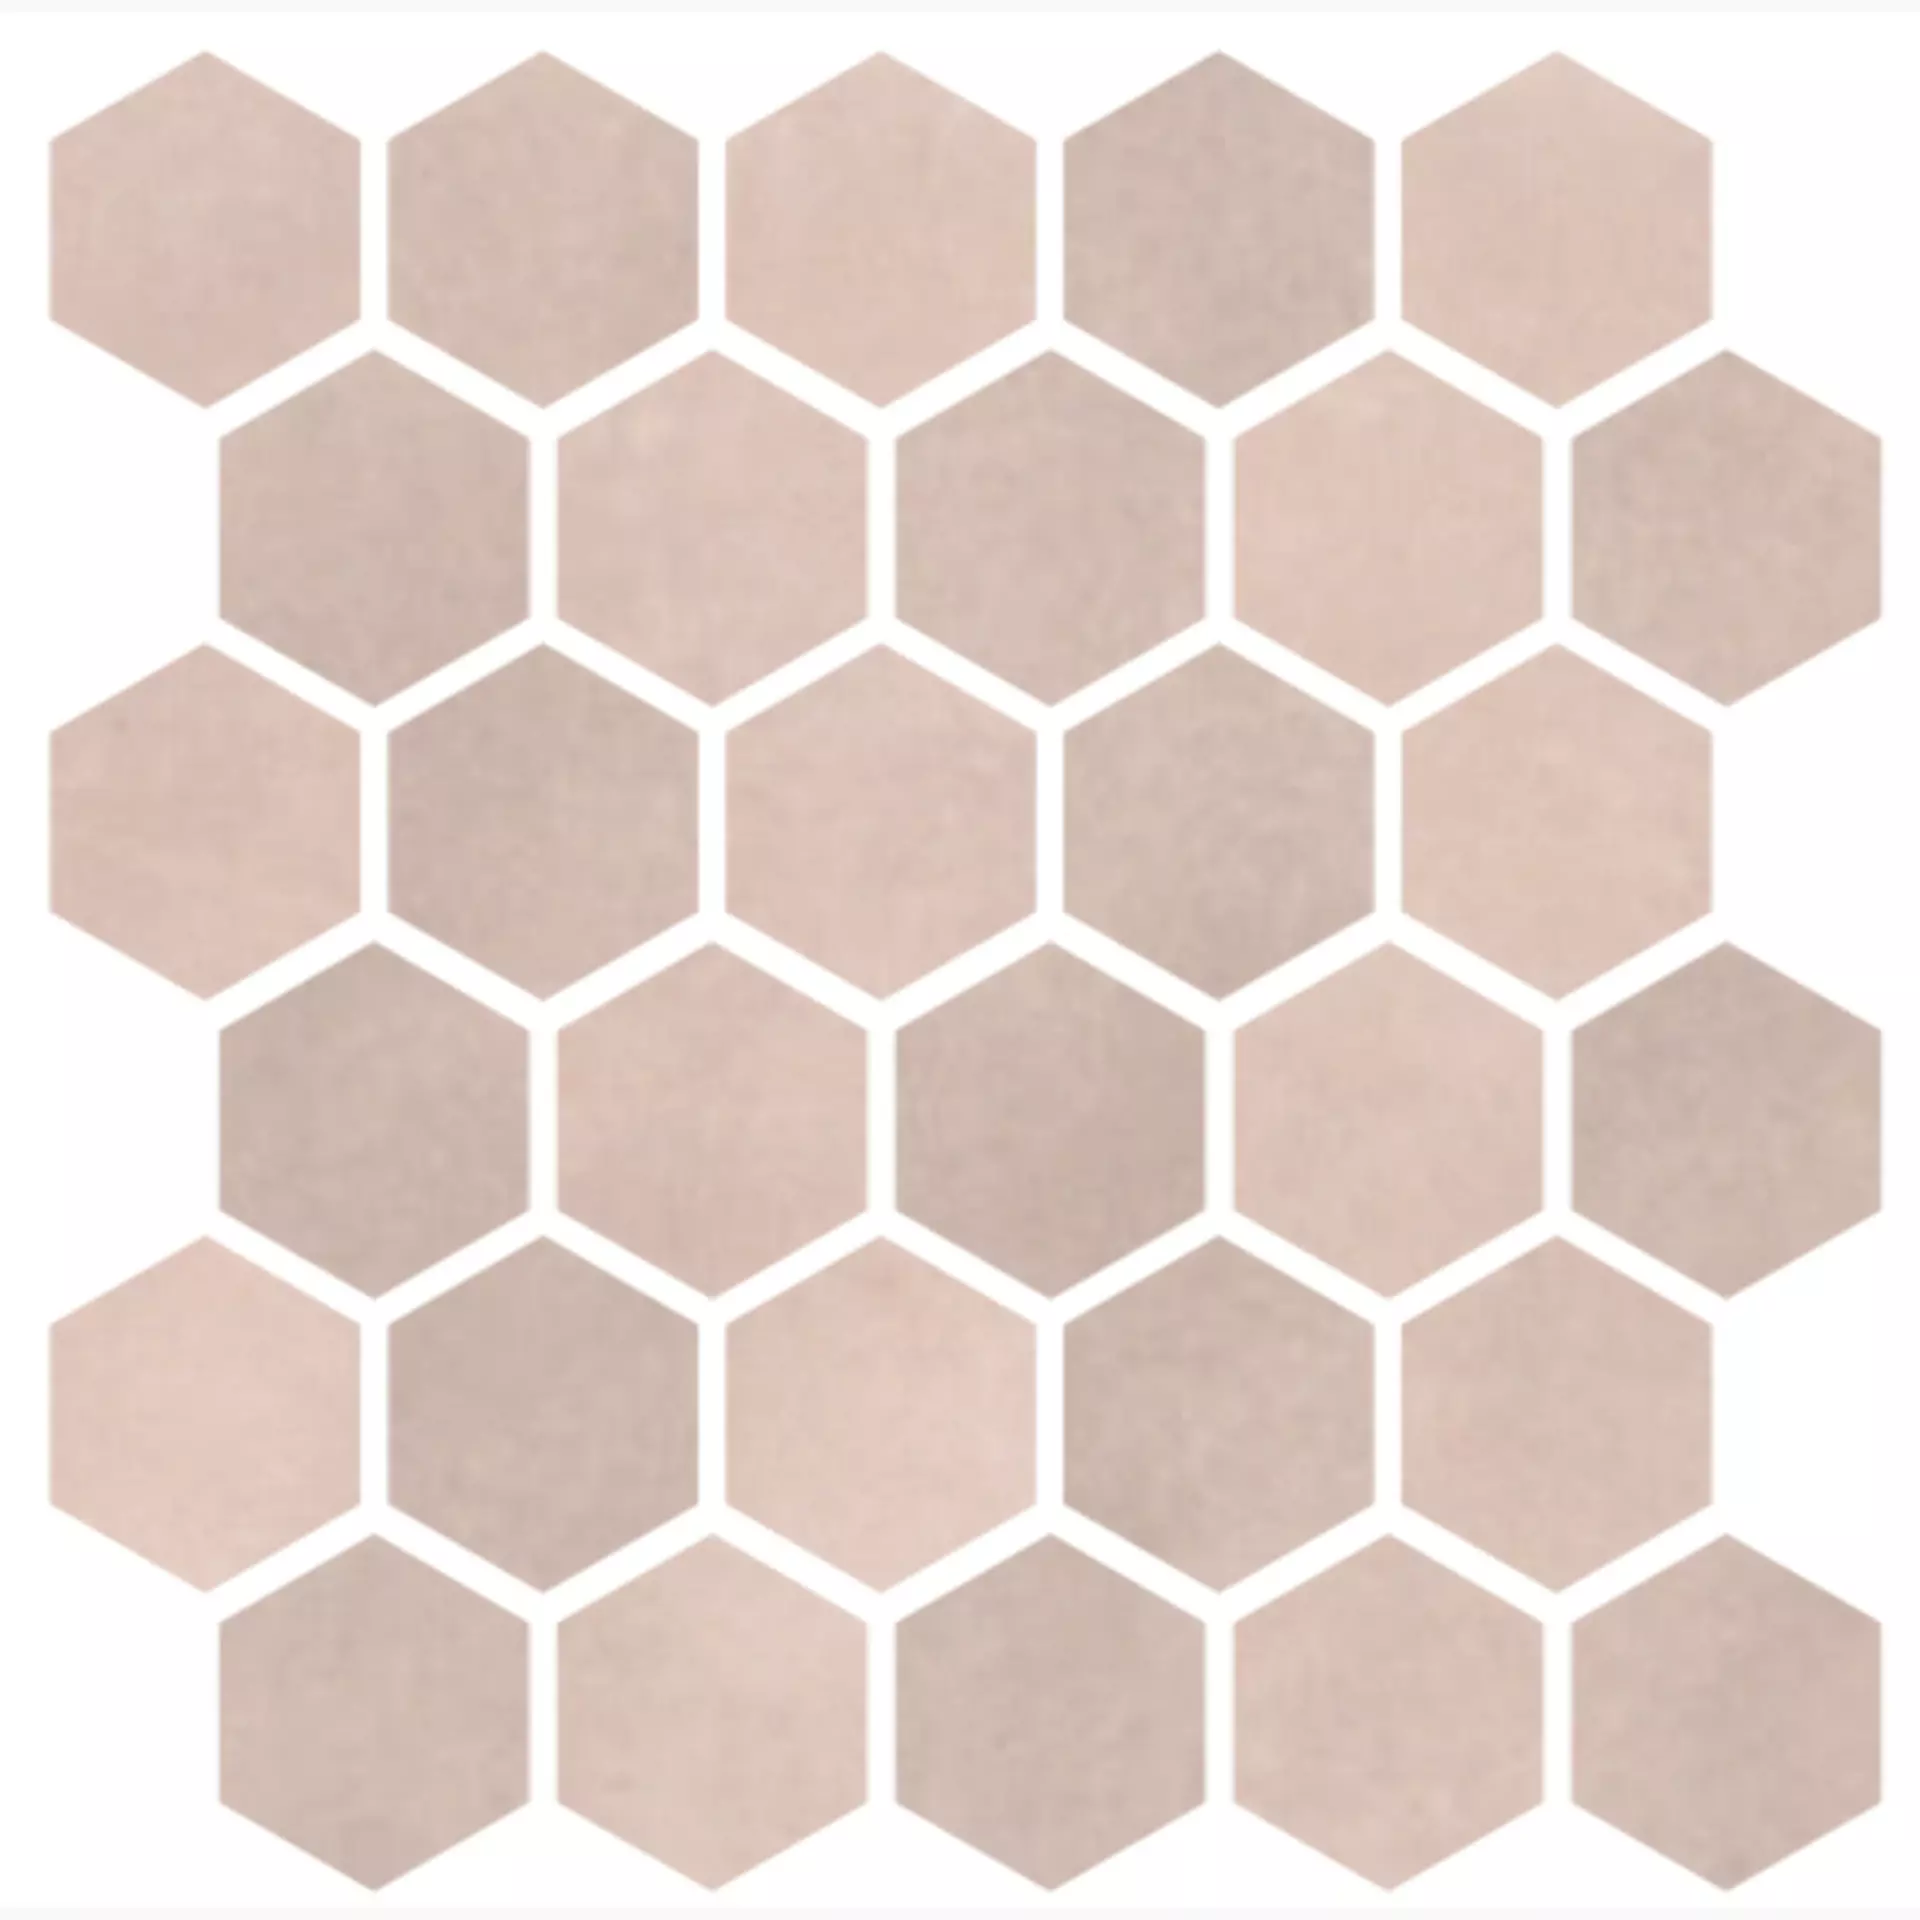 CIR Materia Prima Pink Velvet Naturale Mosaic Hexagon 1069917 27x27cm 10mm